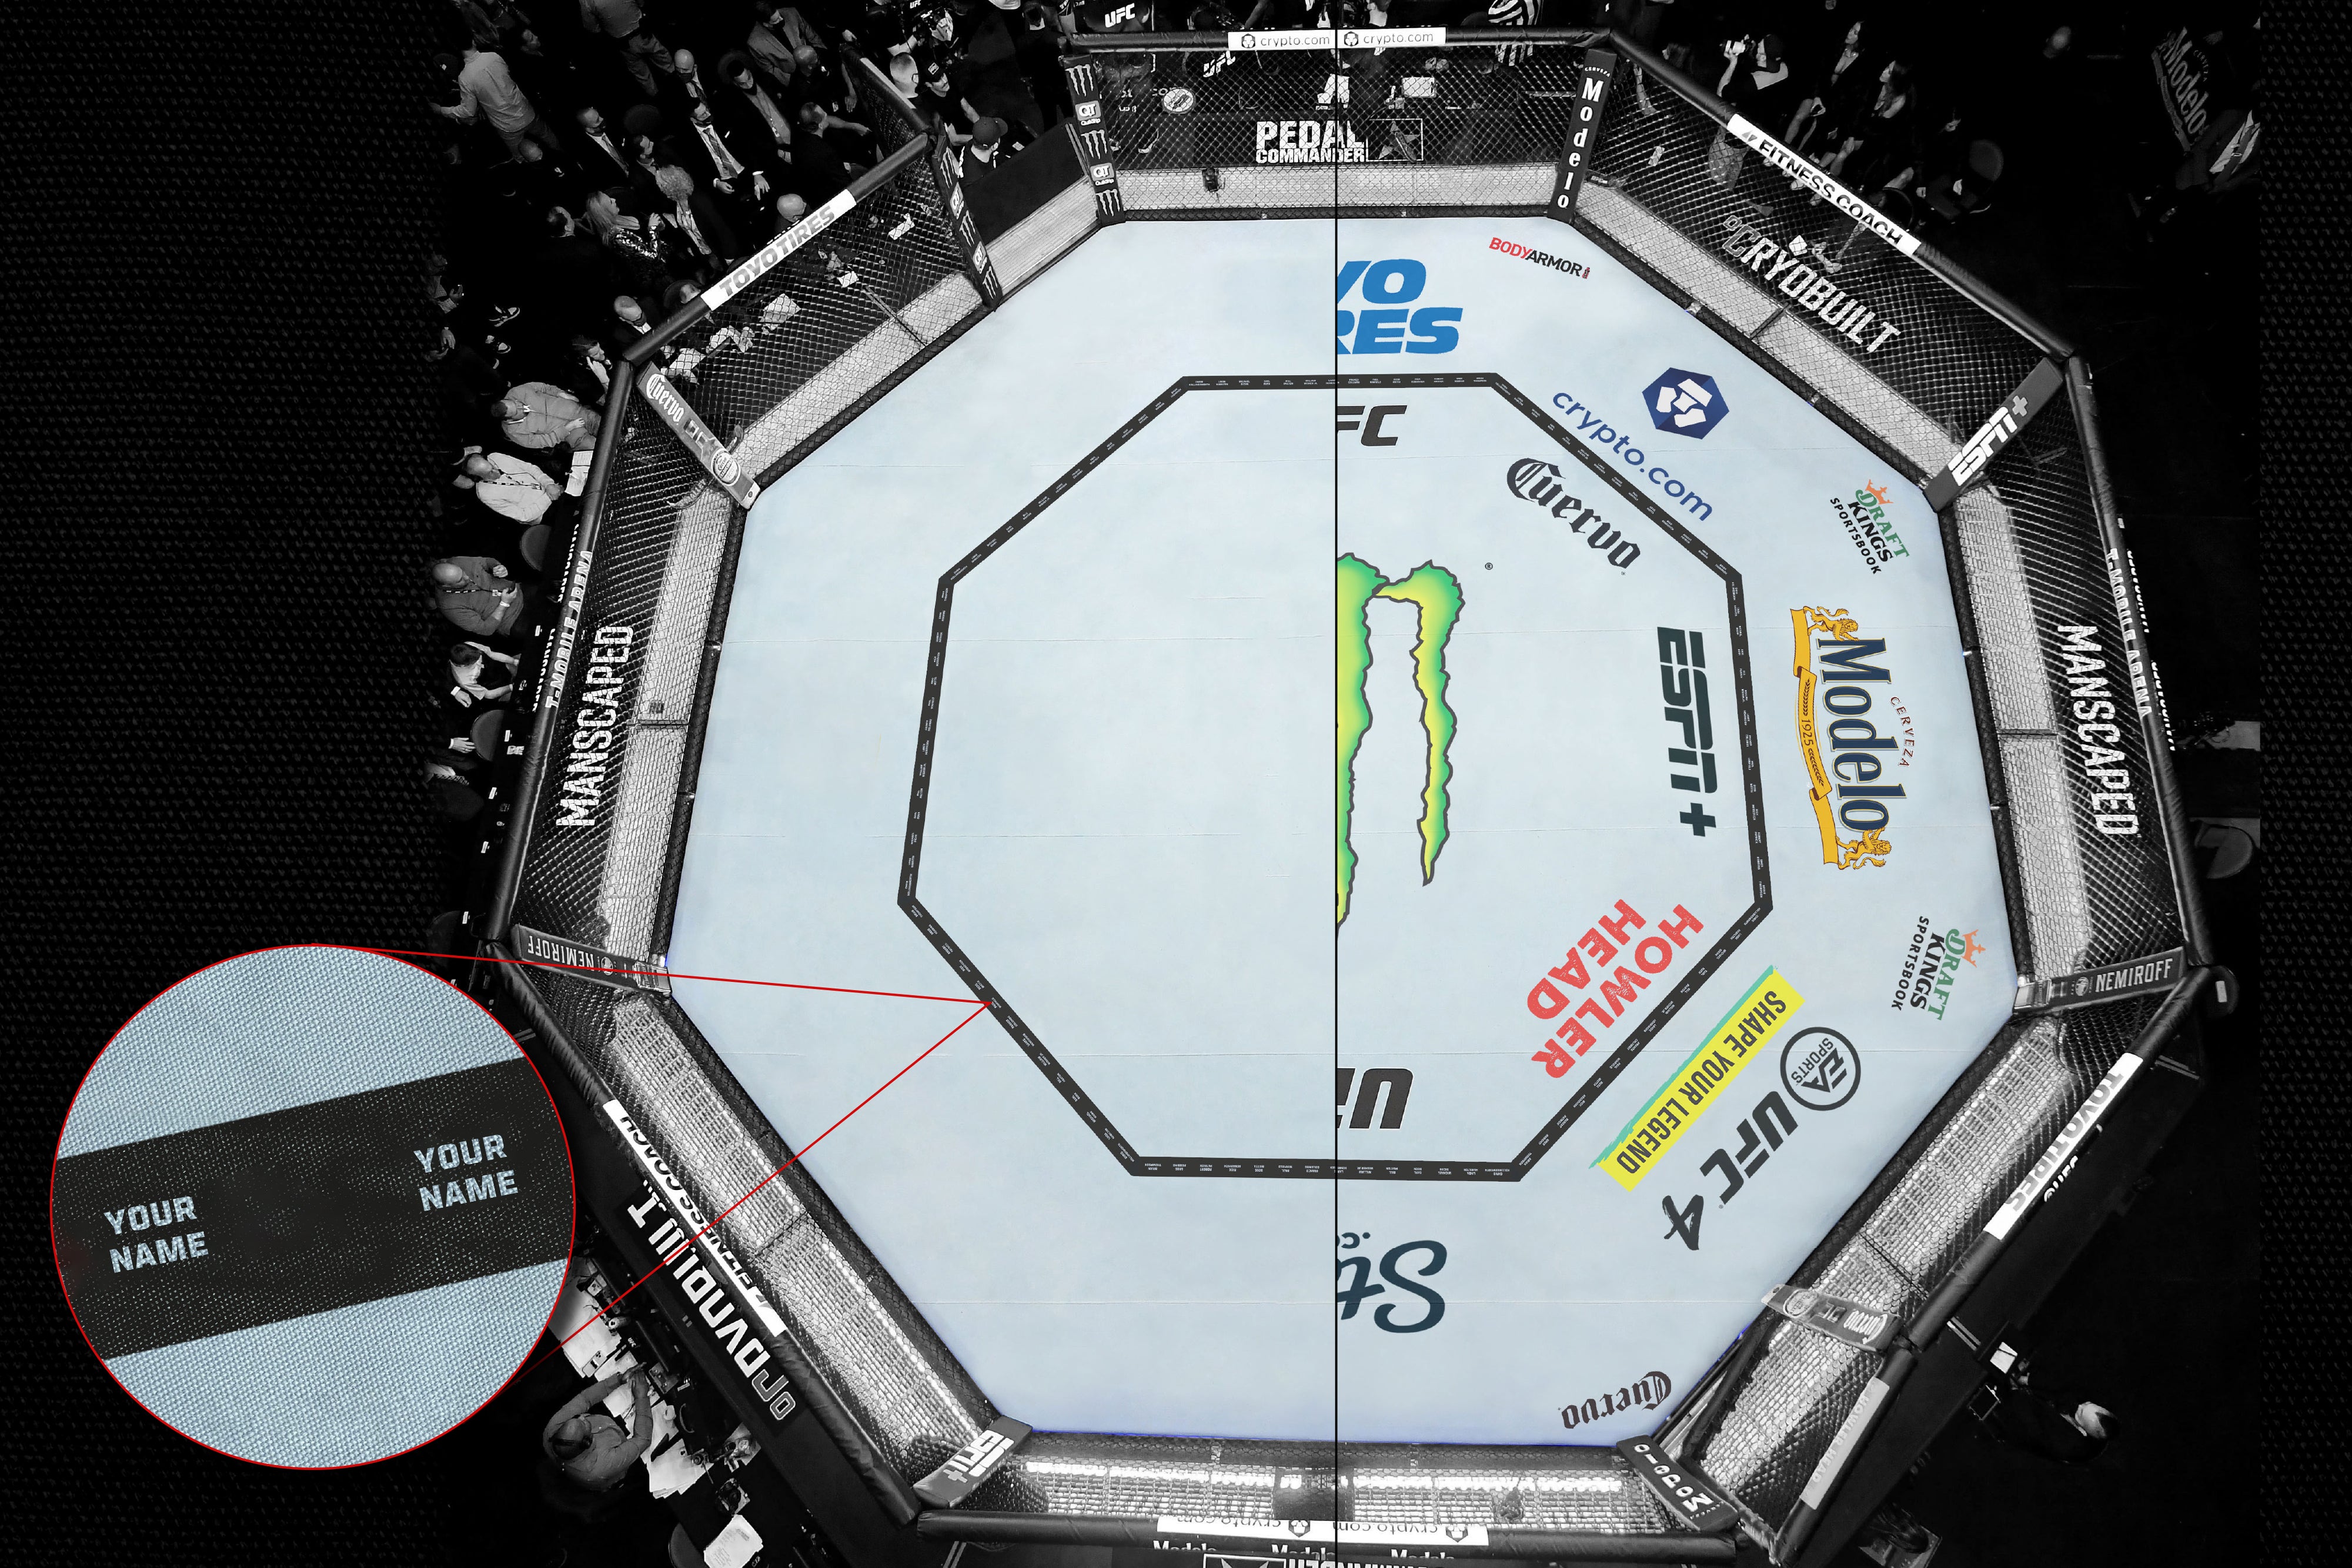 SOLD OUT: UFC 302: Makhachev vs. Poirier Name on Canvas